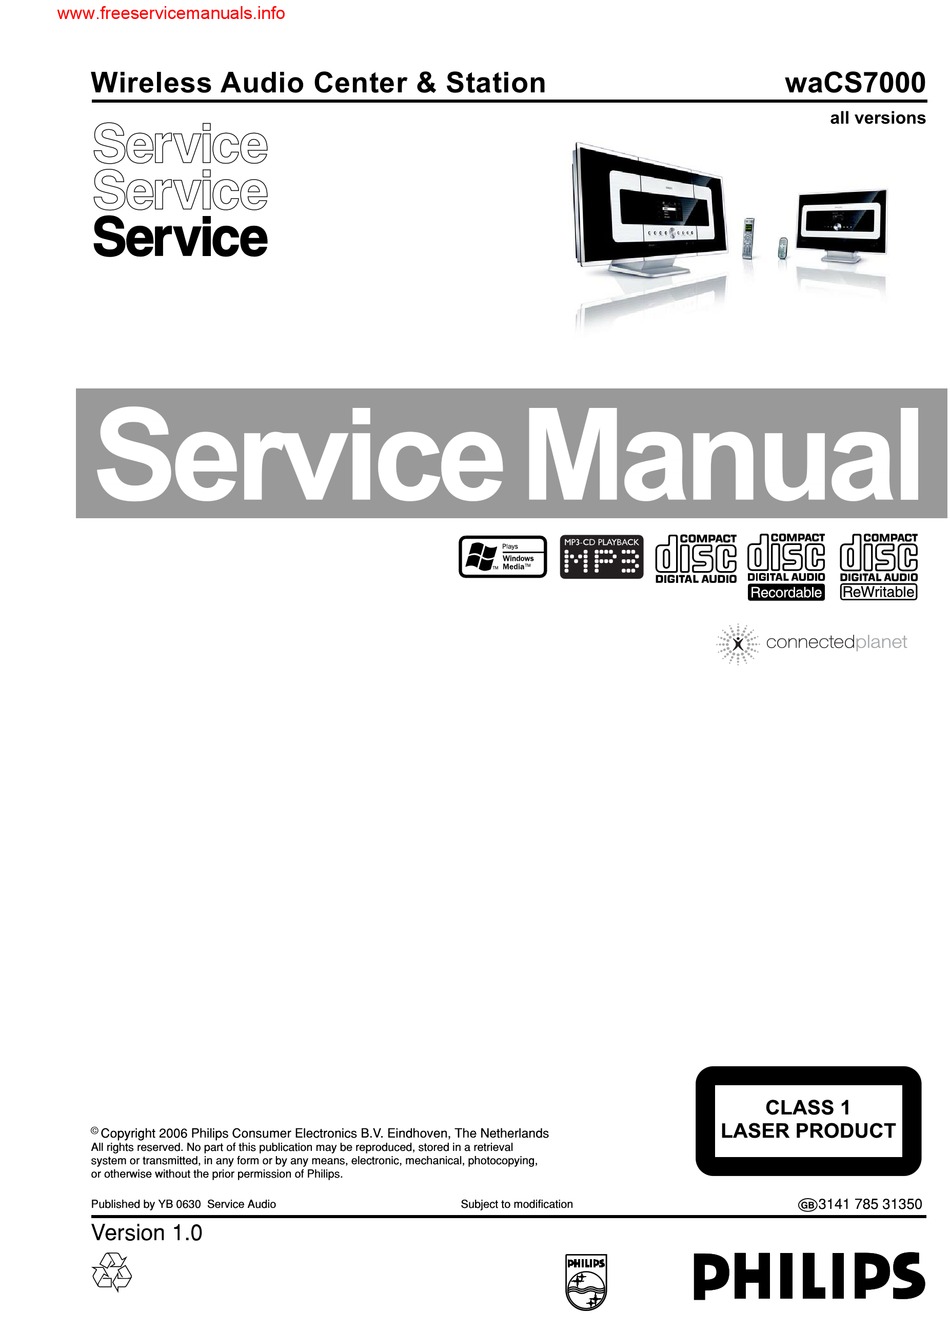 PHILIPS WACS7000 SERVICE MANUAL Pdf Download | ManualsLib